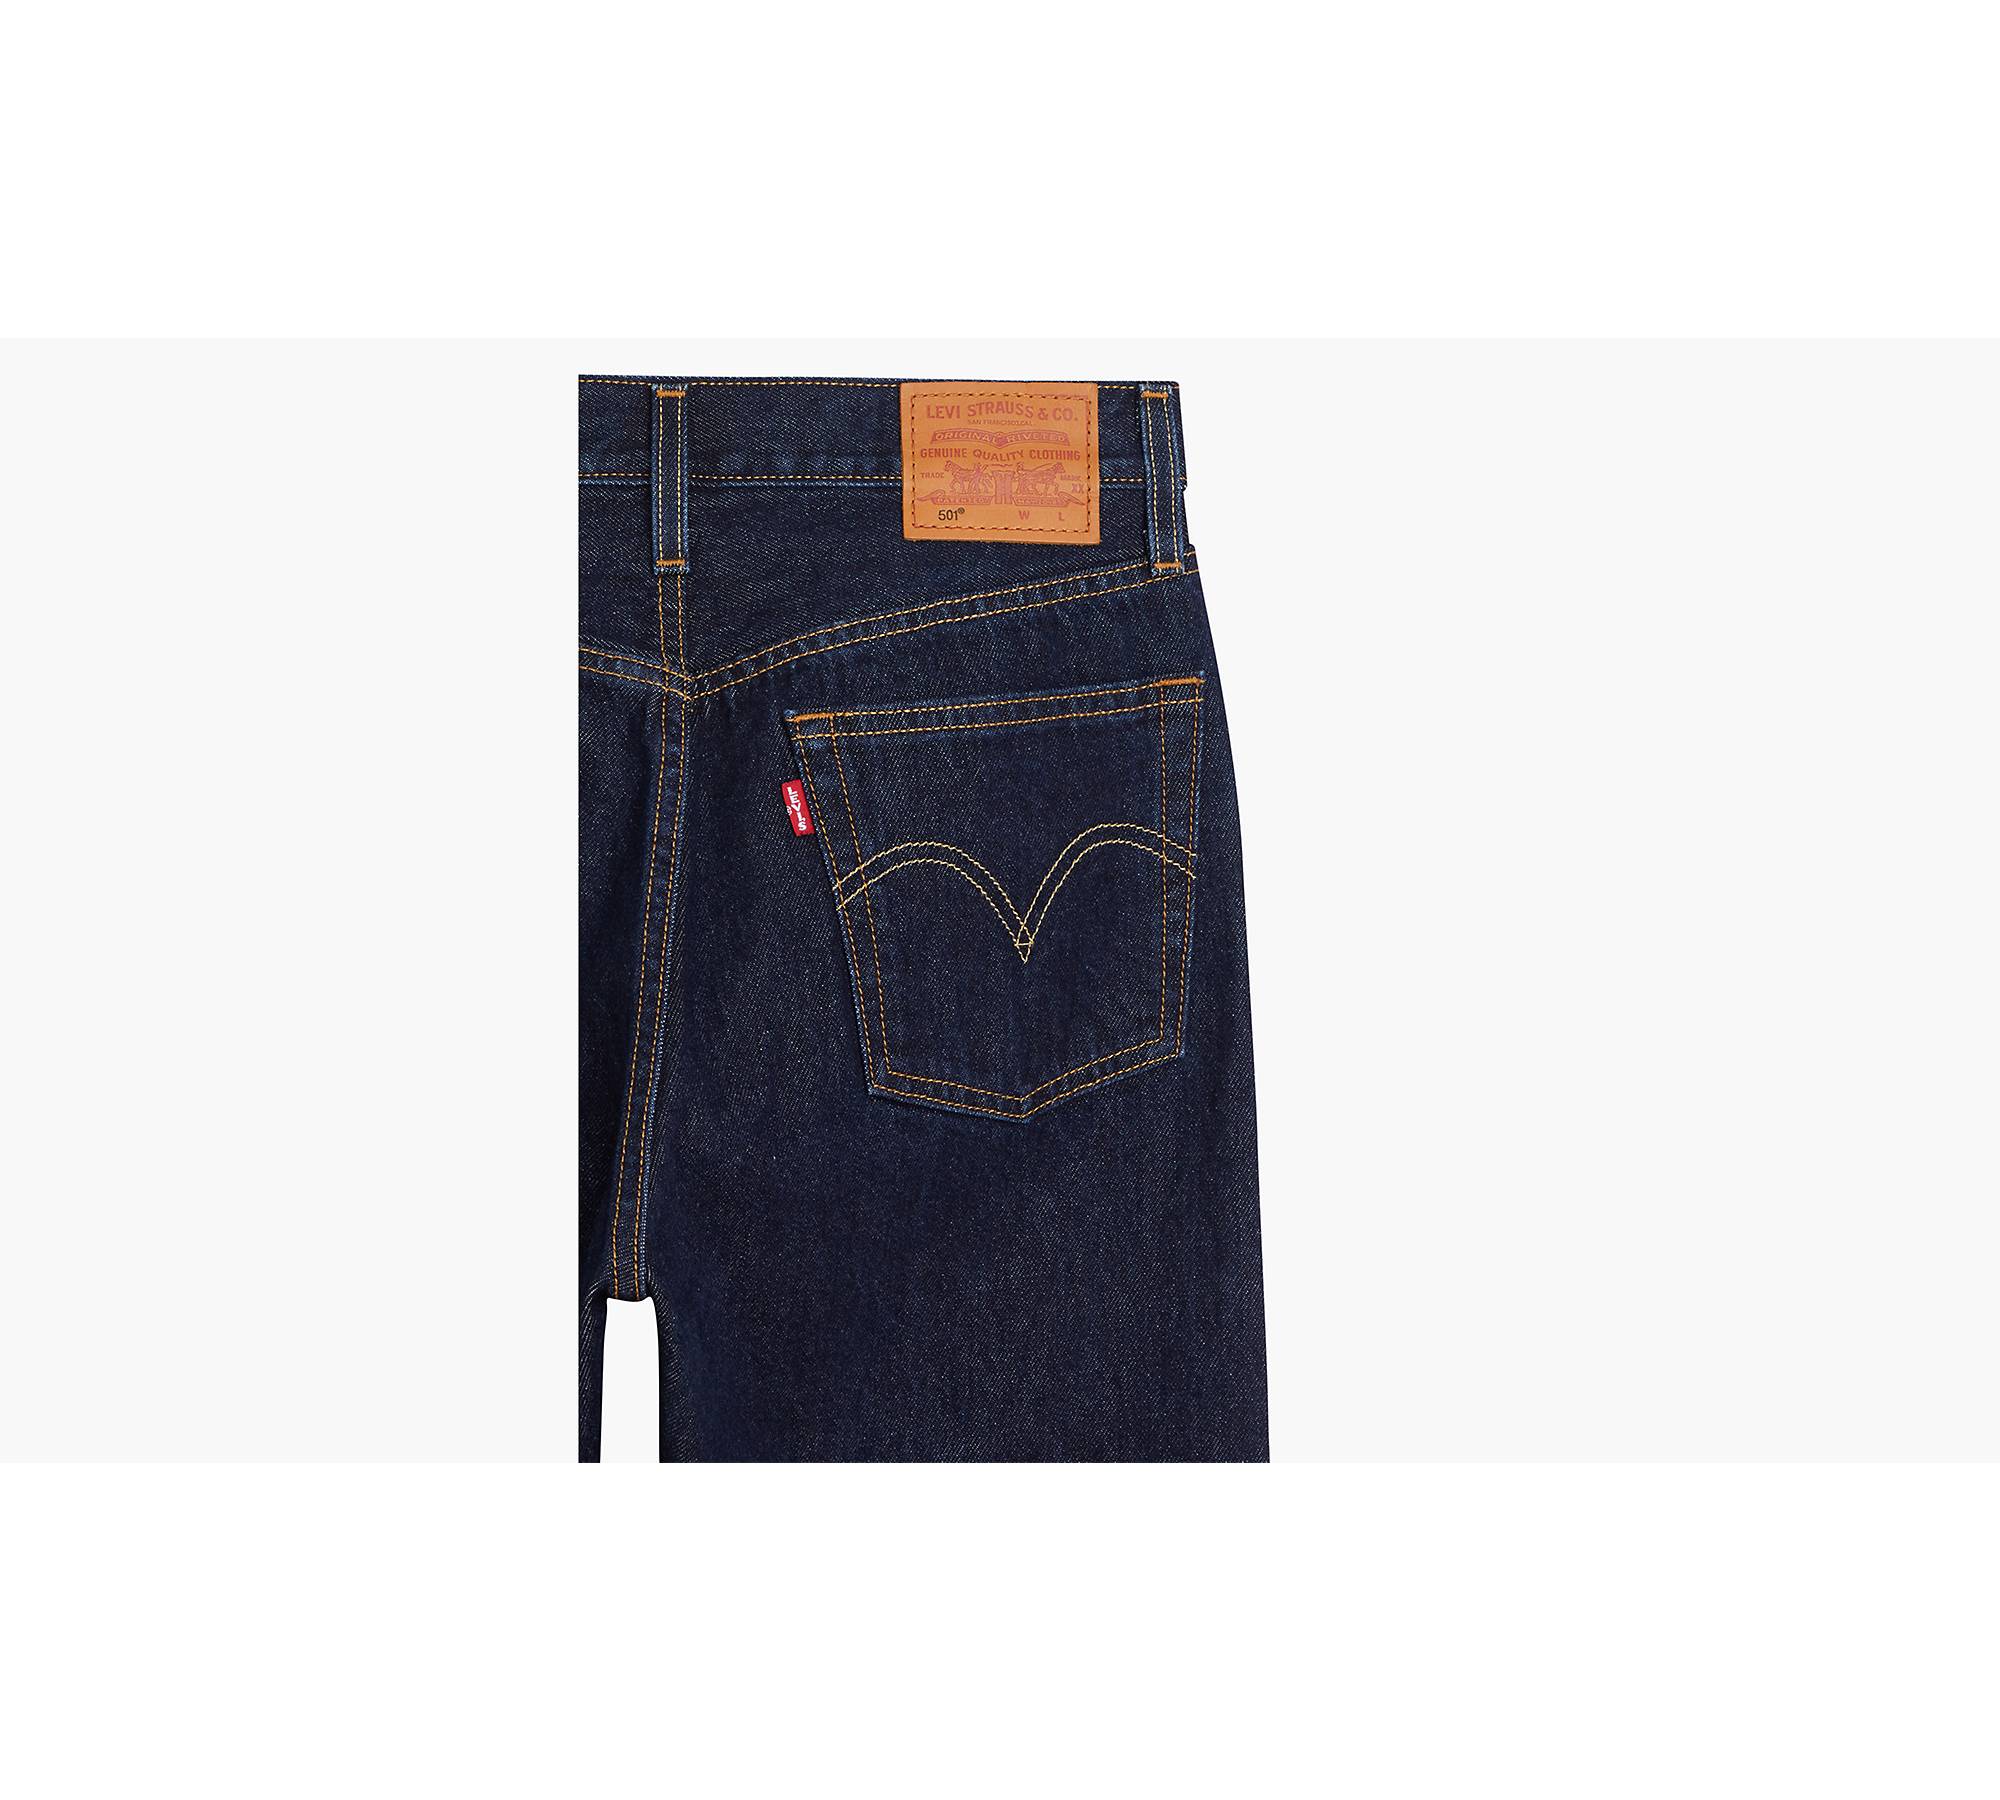 NEW Levis Lot 501 Jeans Big E Premium Blue Black Denim Genuine Straight BNWT